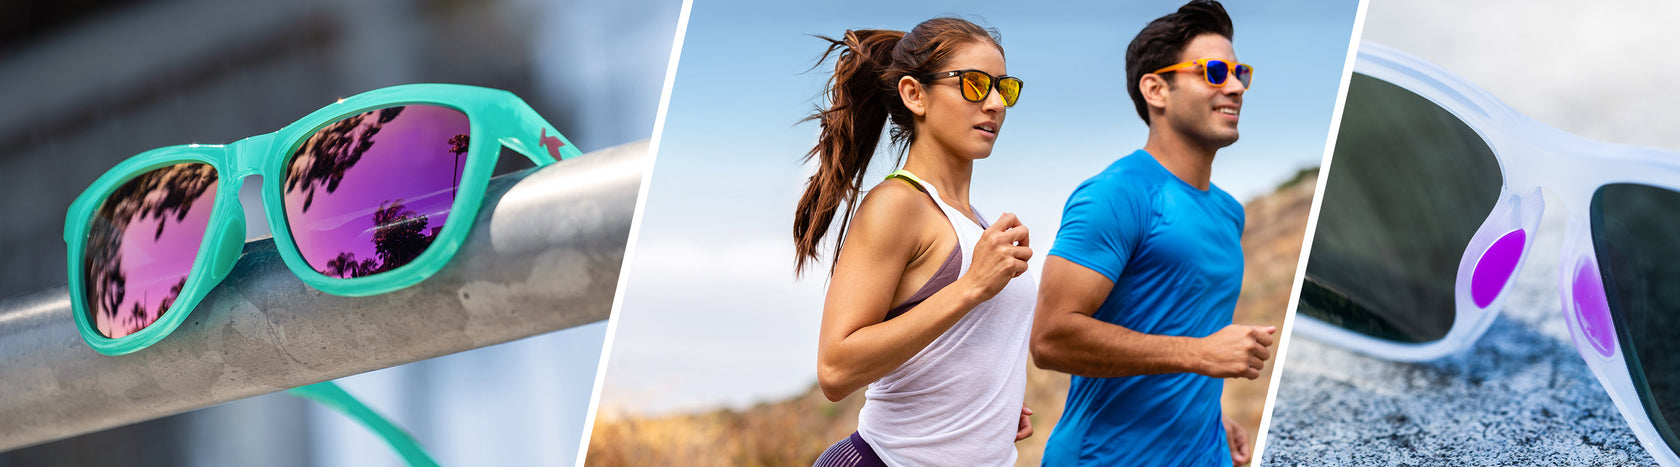 Athletic Sport Sunglasses for Running & More